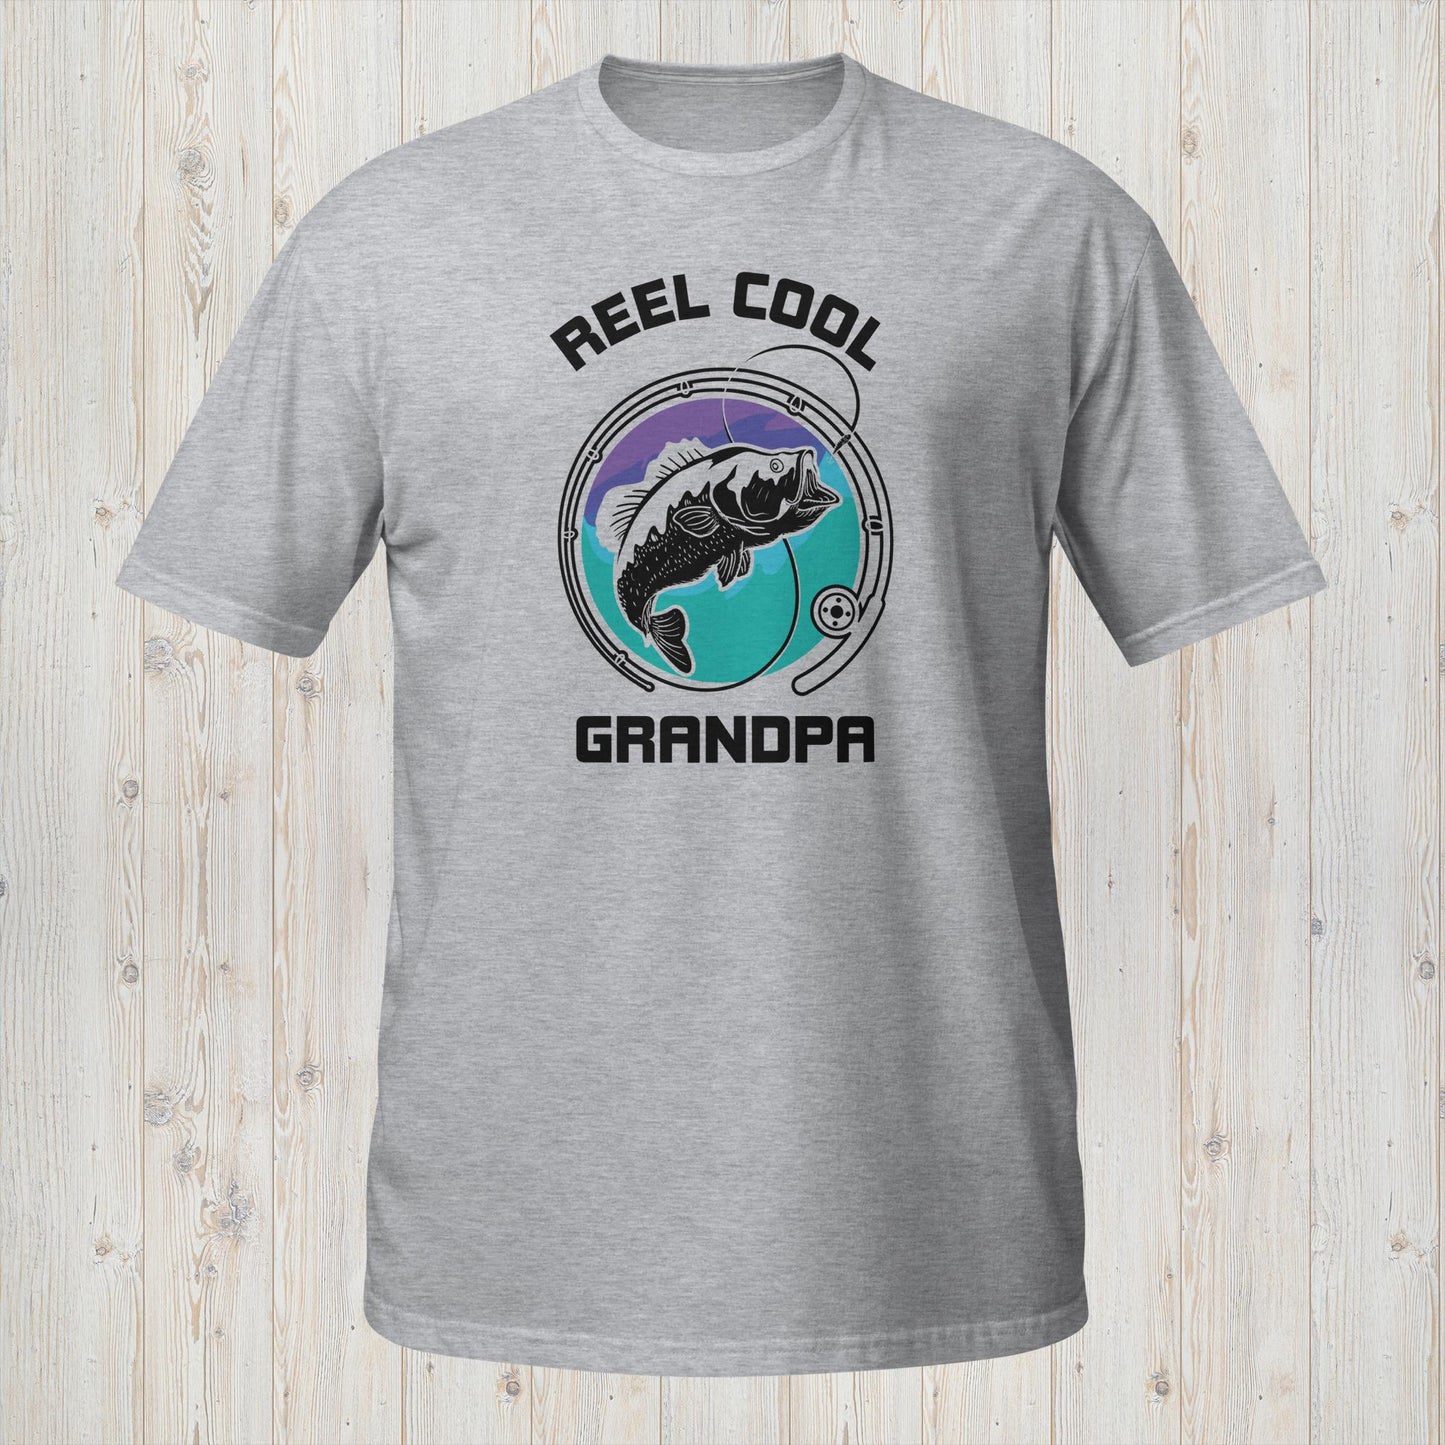 Reel Cool Grandpa Tee - A Fishing-Inspired Grandfather Shirt